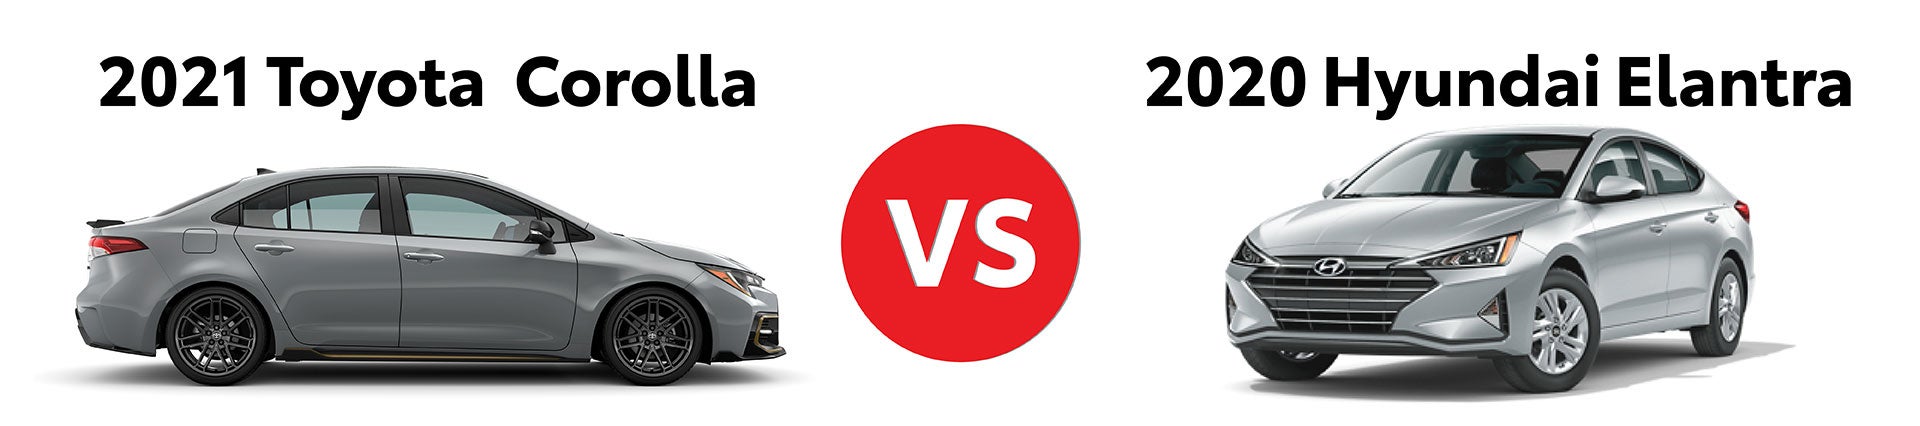 2021 Toyota Corolla vs 2020 Hyundai Elantra